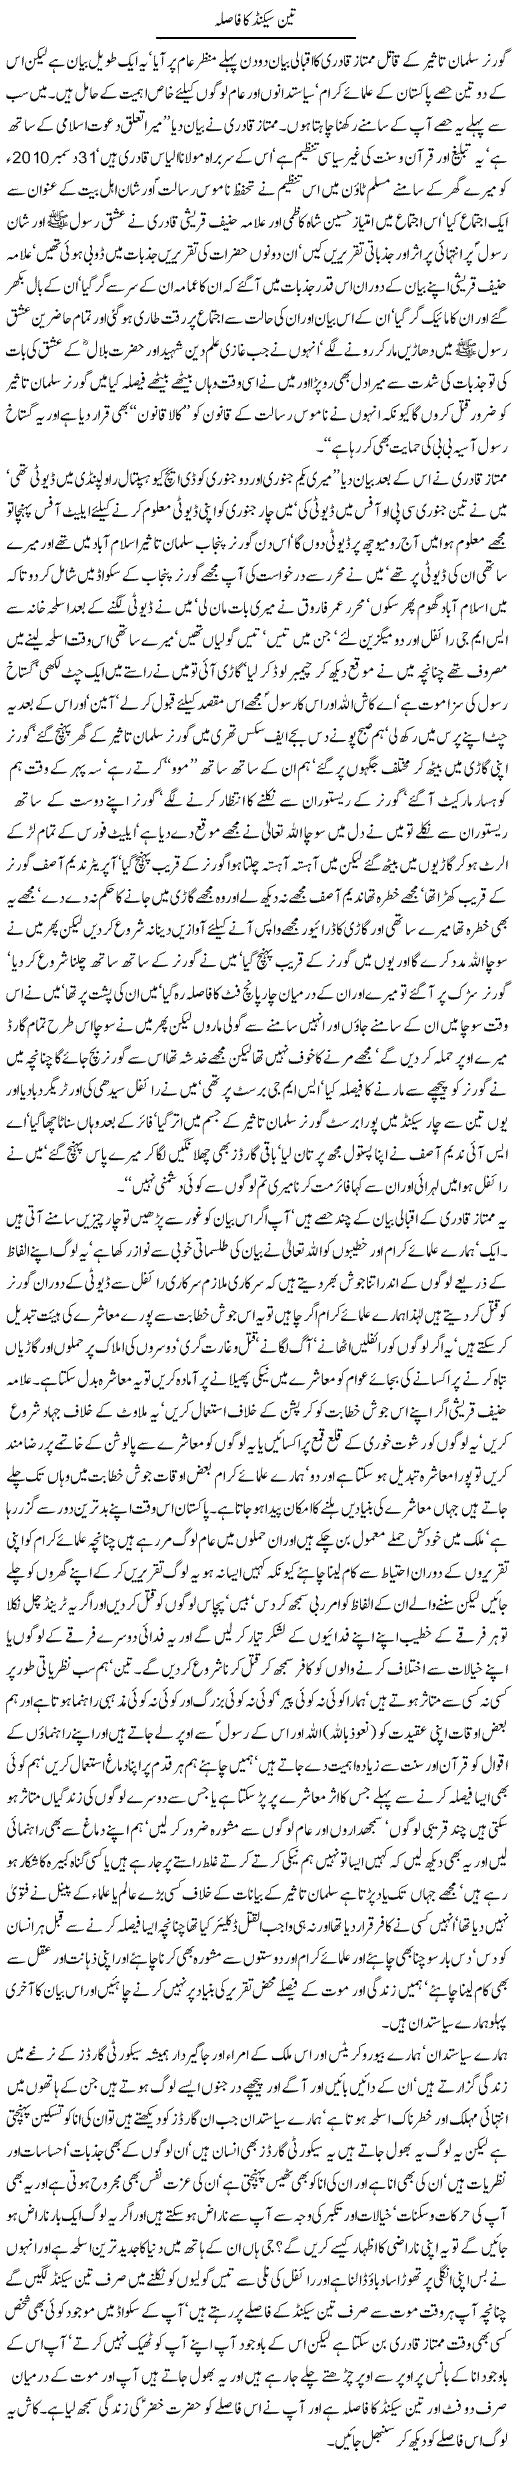 Mumtaz Qadri Controversy